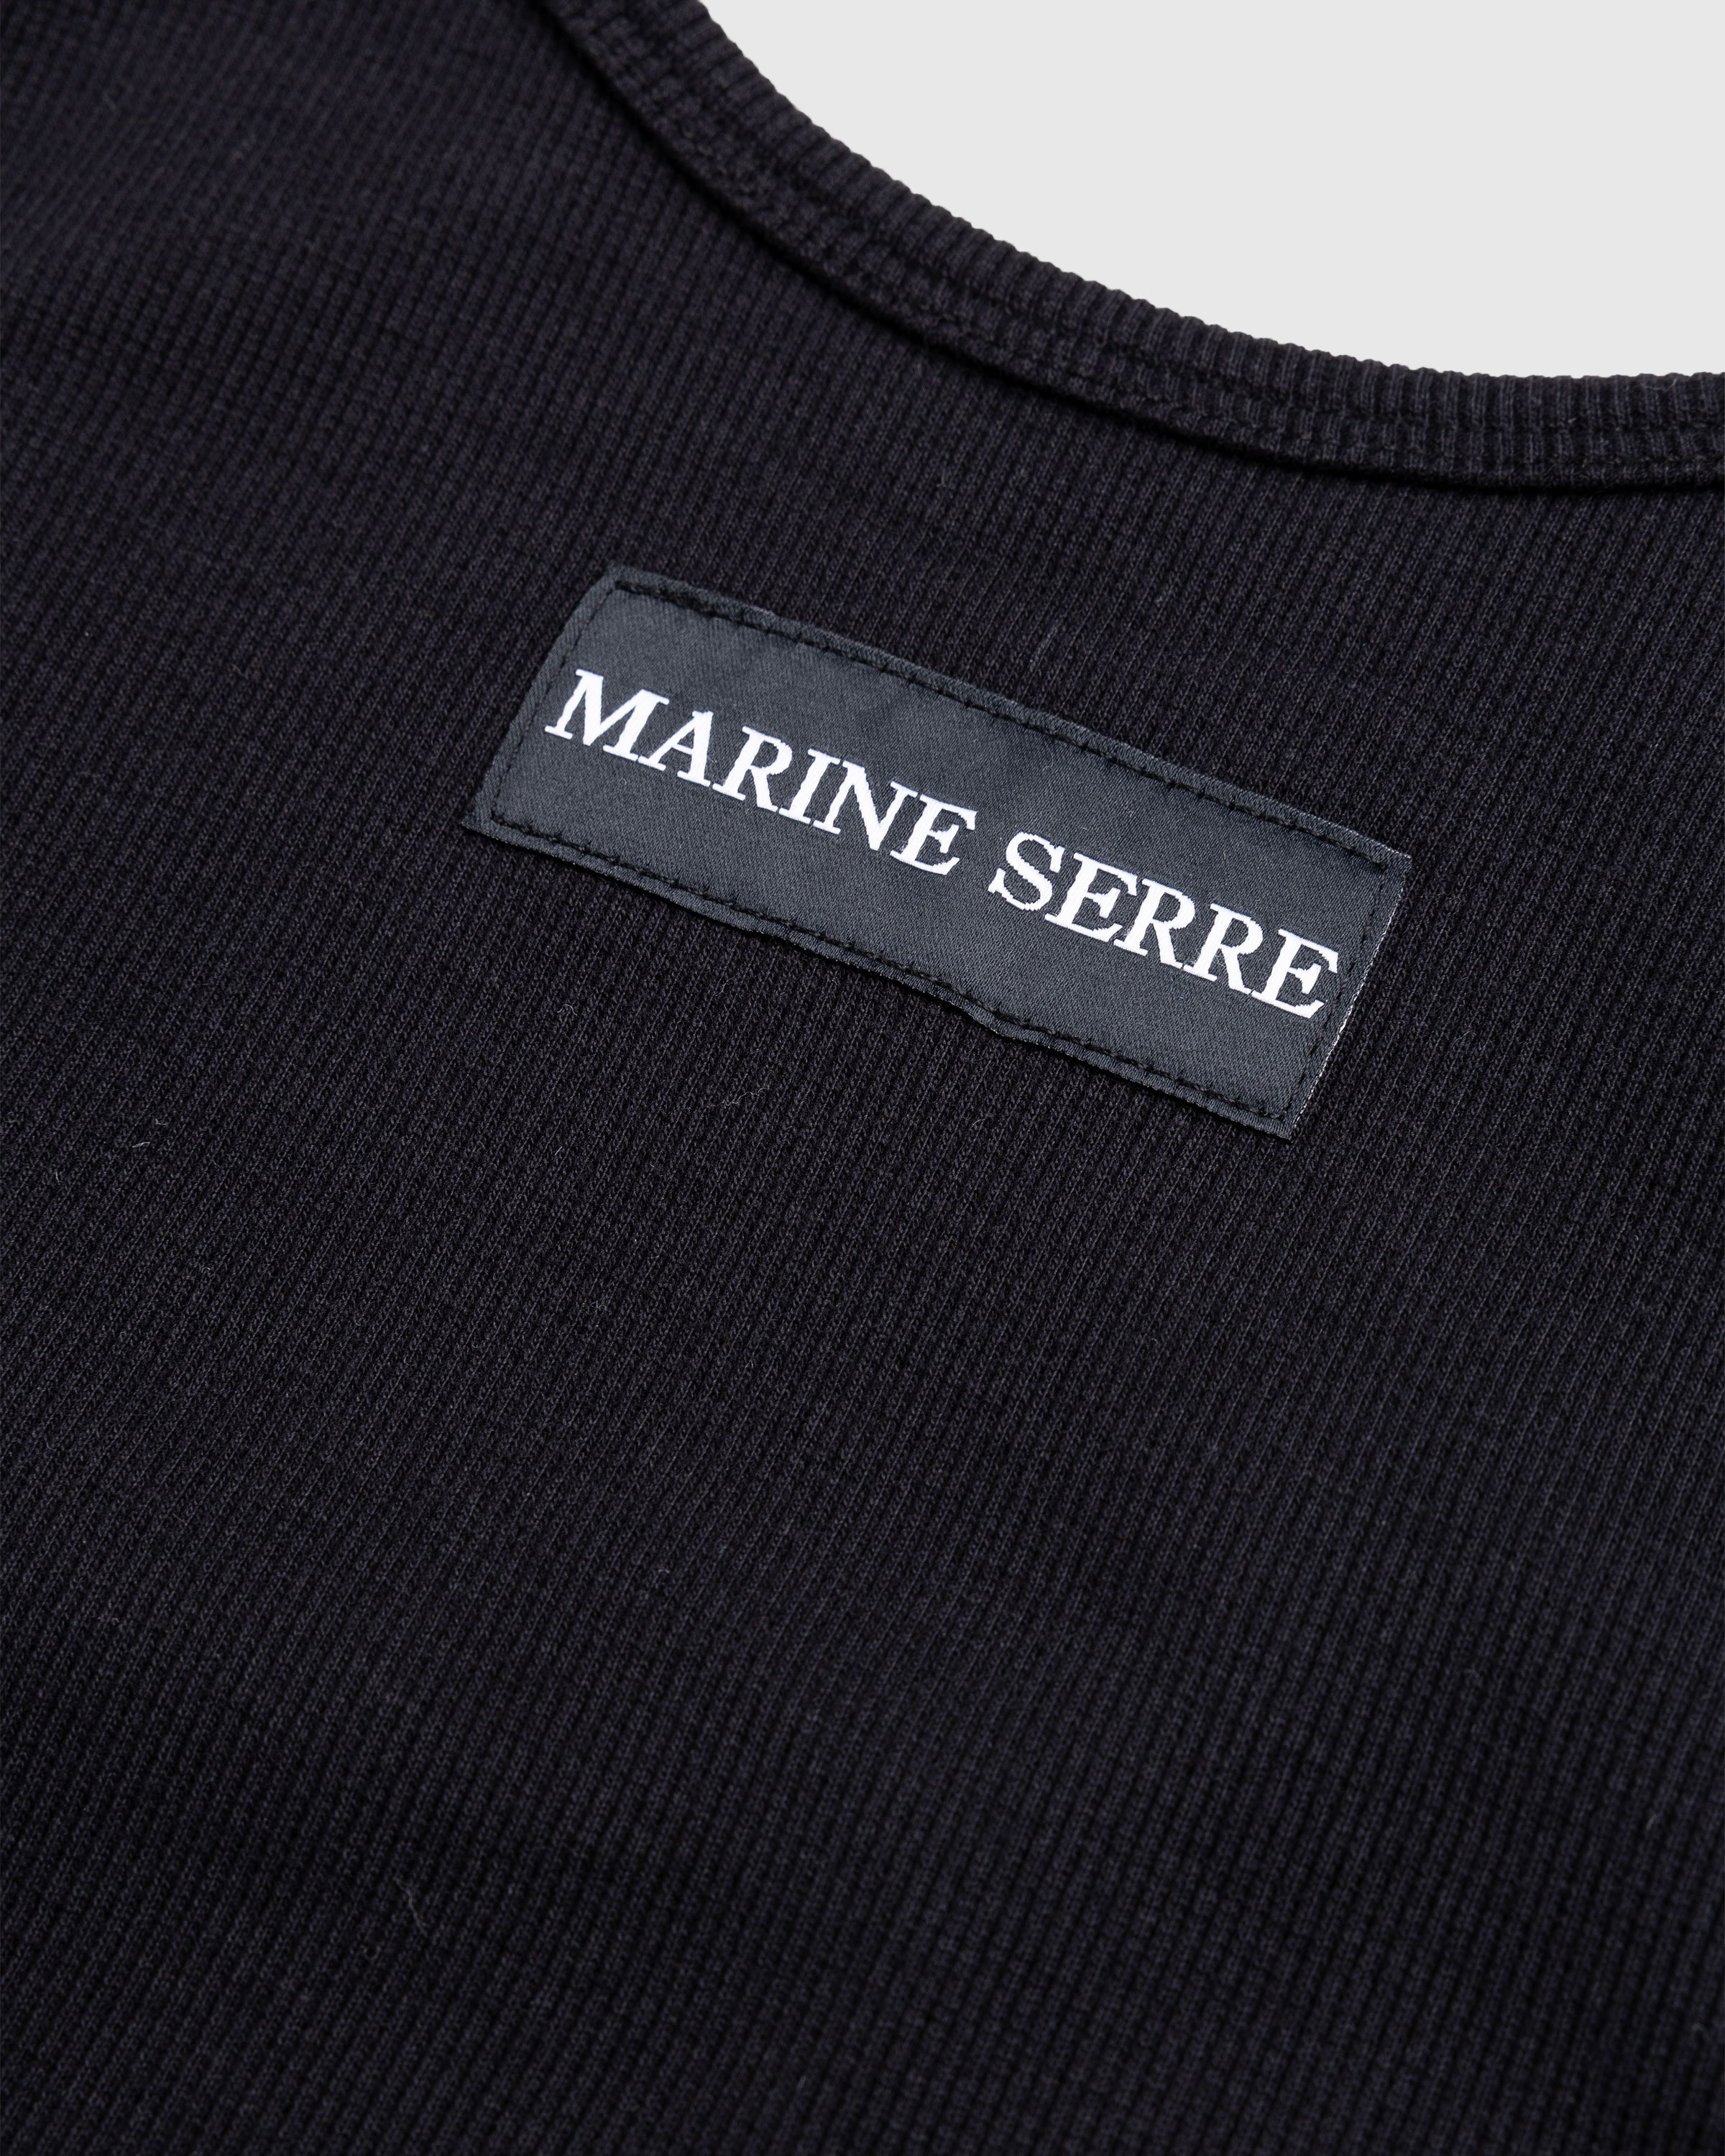 Marine Serre - Organic Cotton Fitted Tank Top Black - Clothing - Black - Image 5